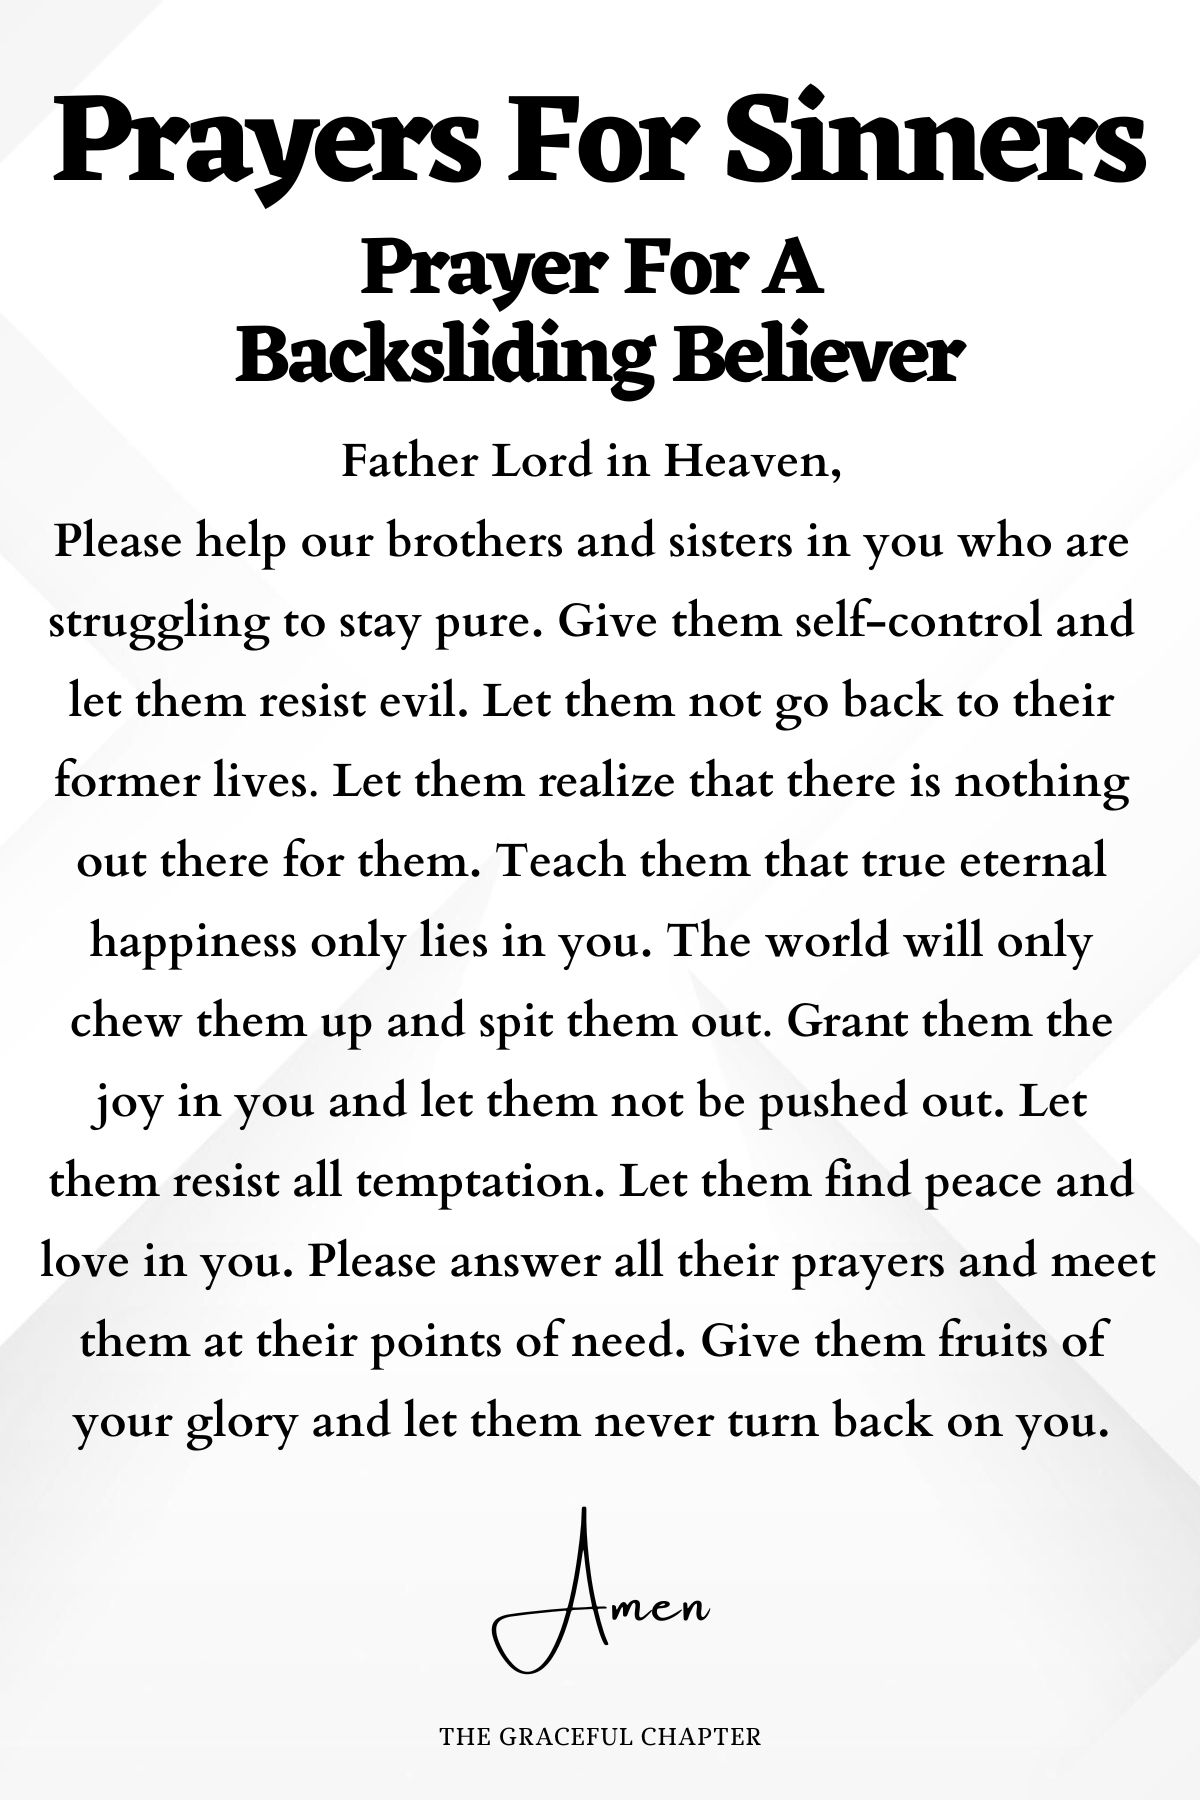 Prayer for a backsliding believer